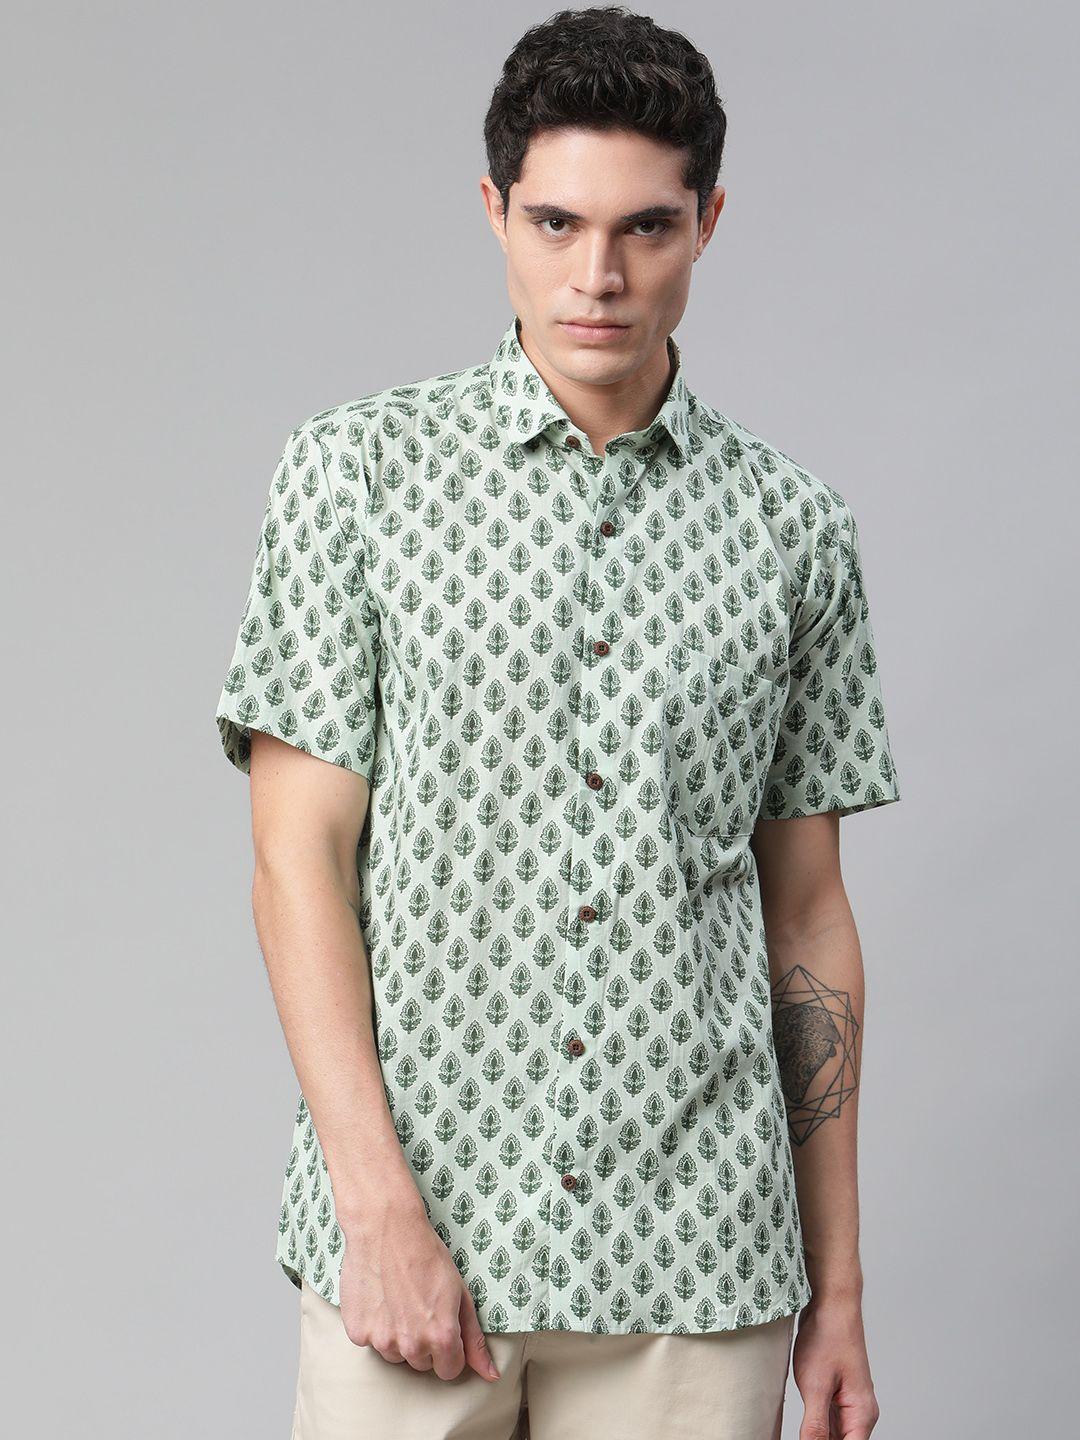 millennial men sea green comfort printed casual shirt